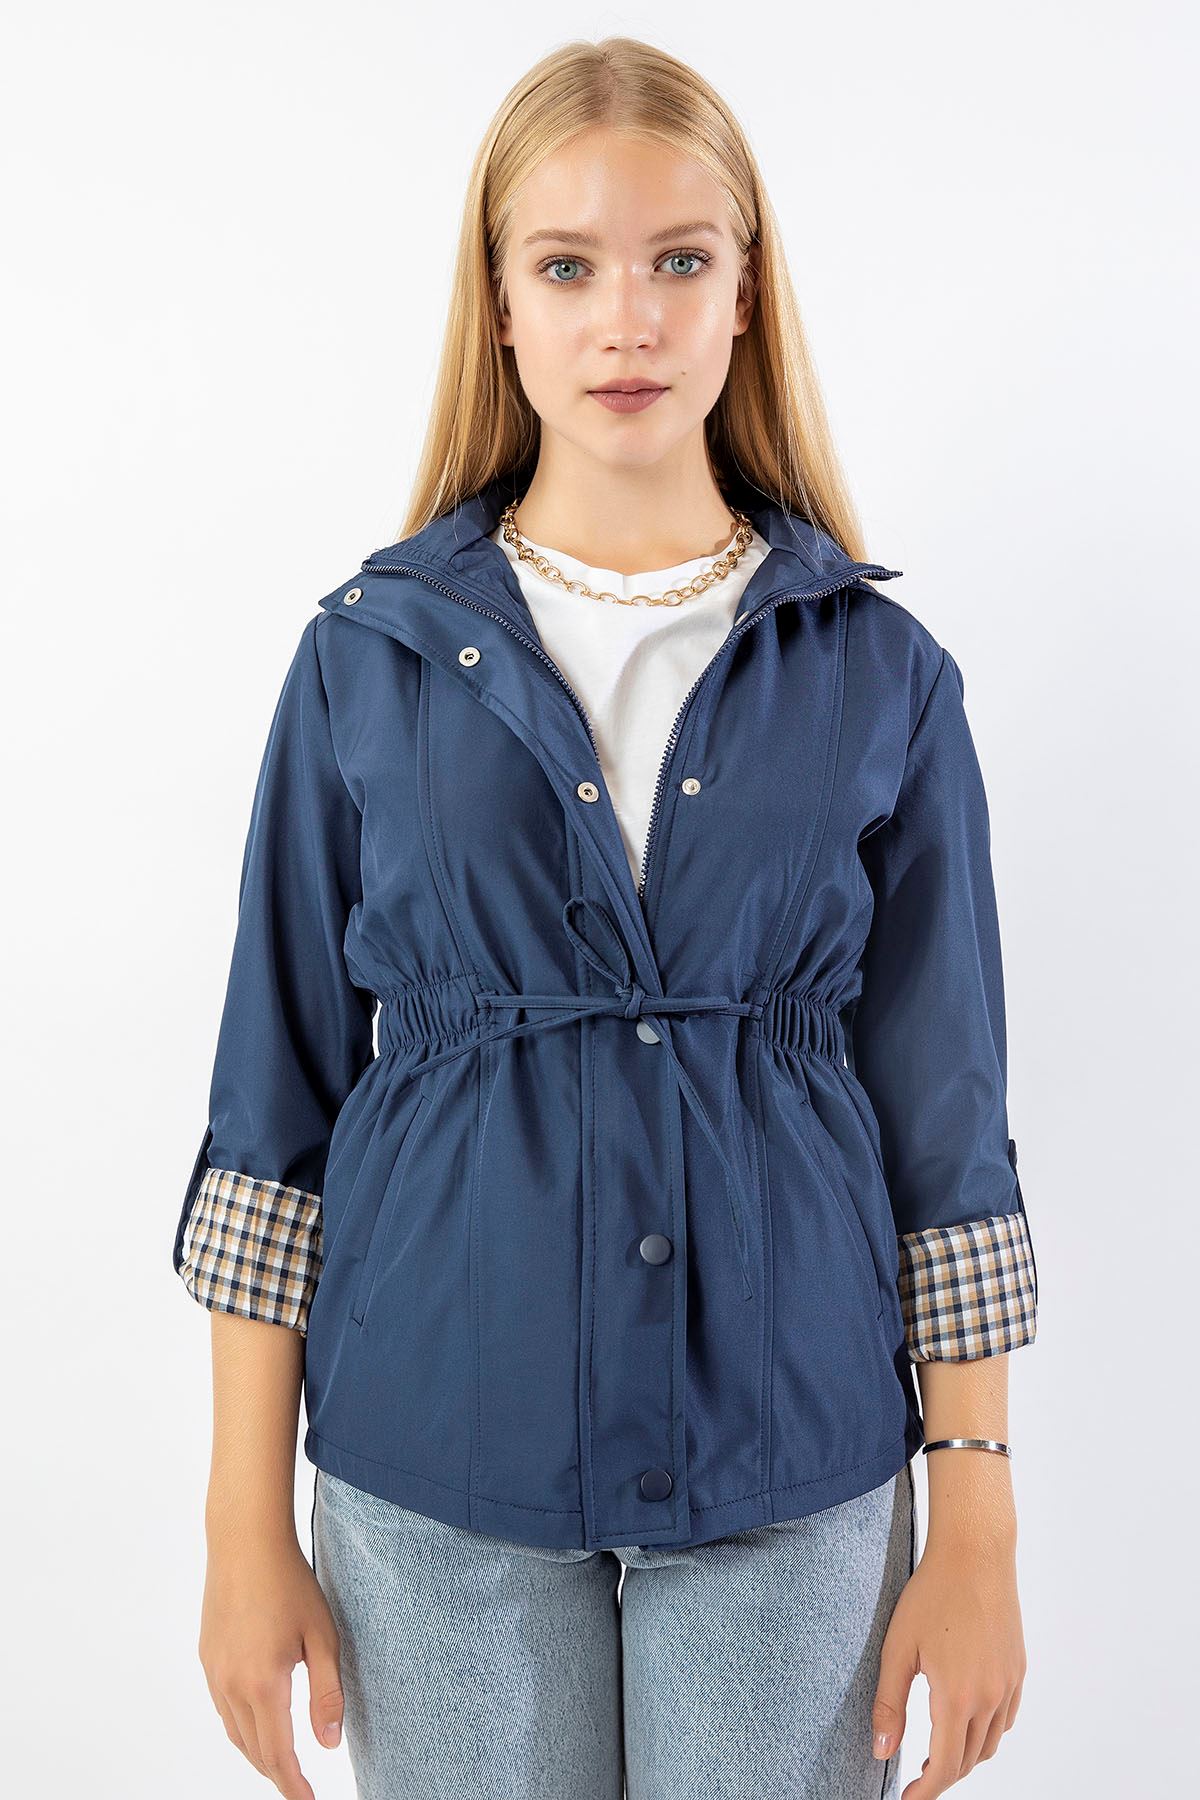 Hooded Hip Height Women Raincoat - Navy Blue 